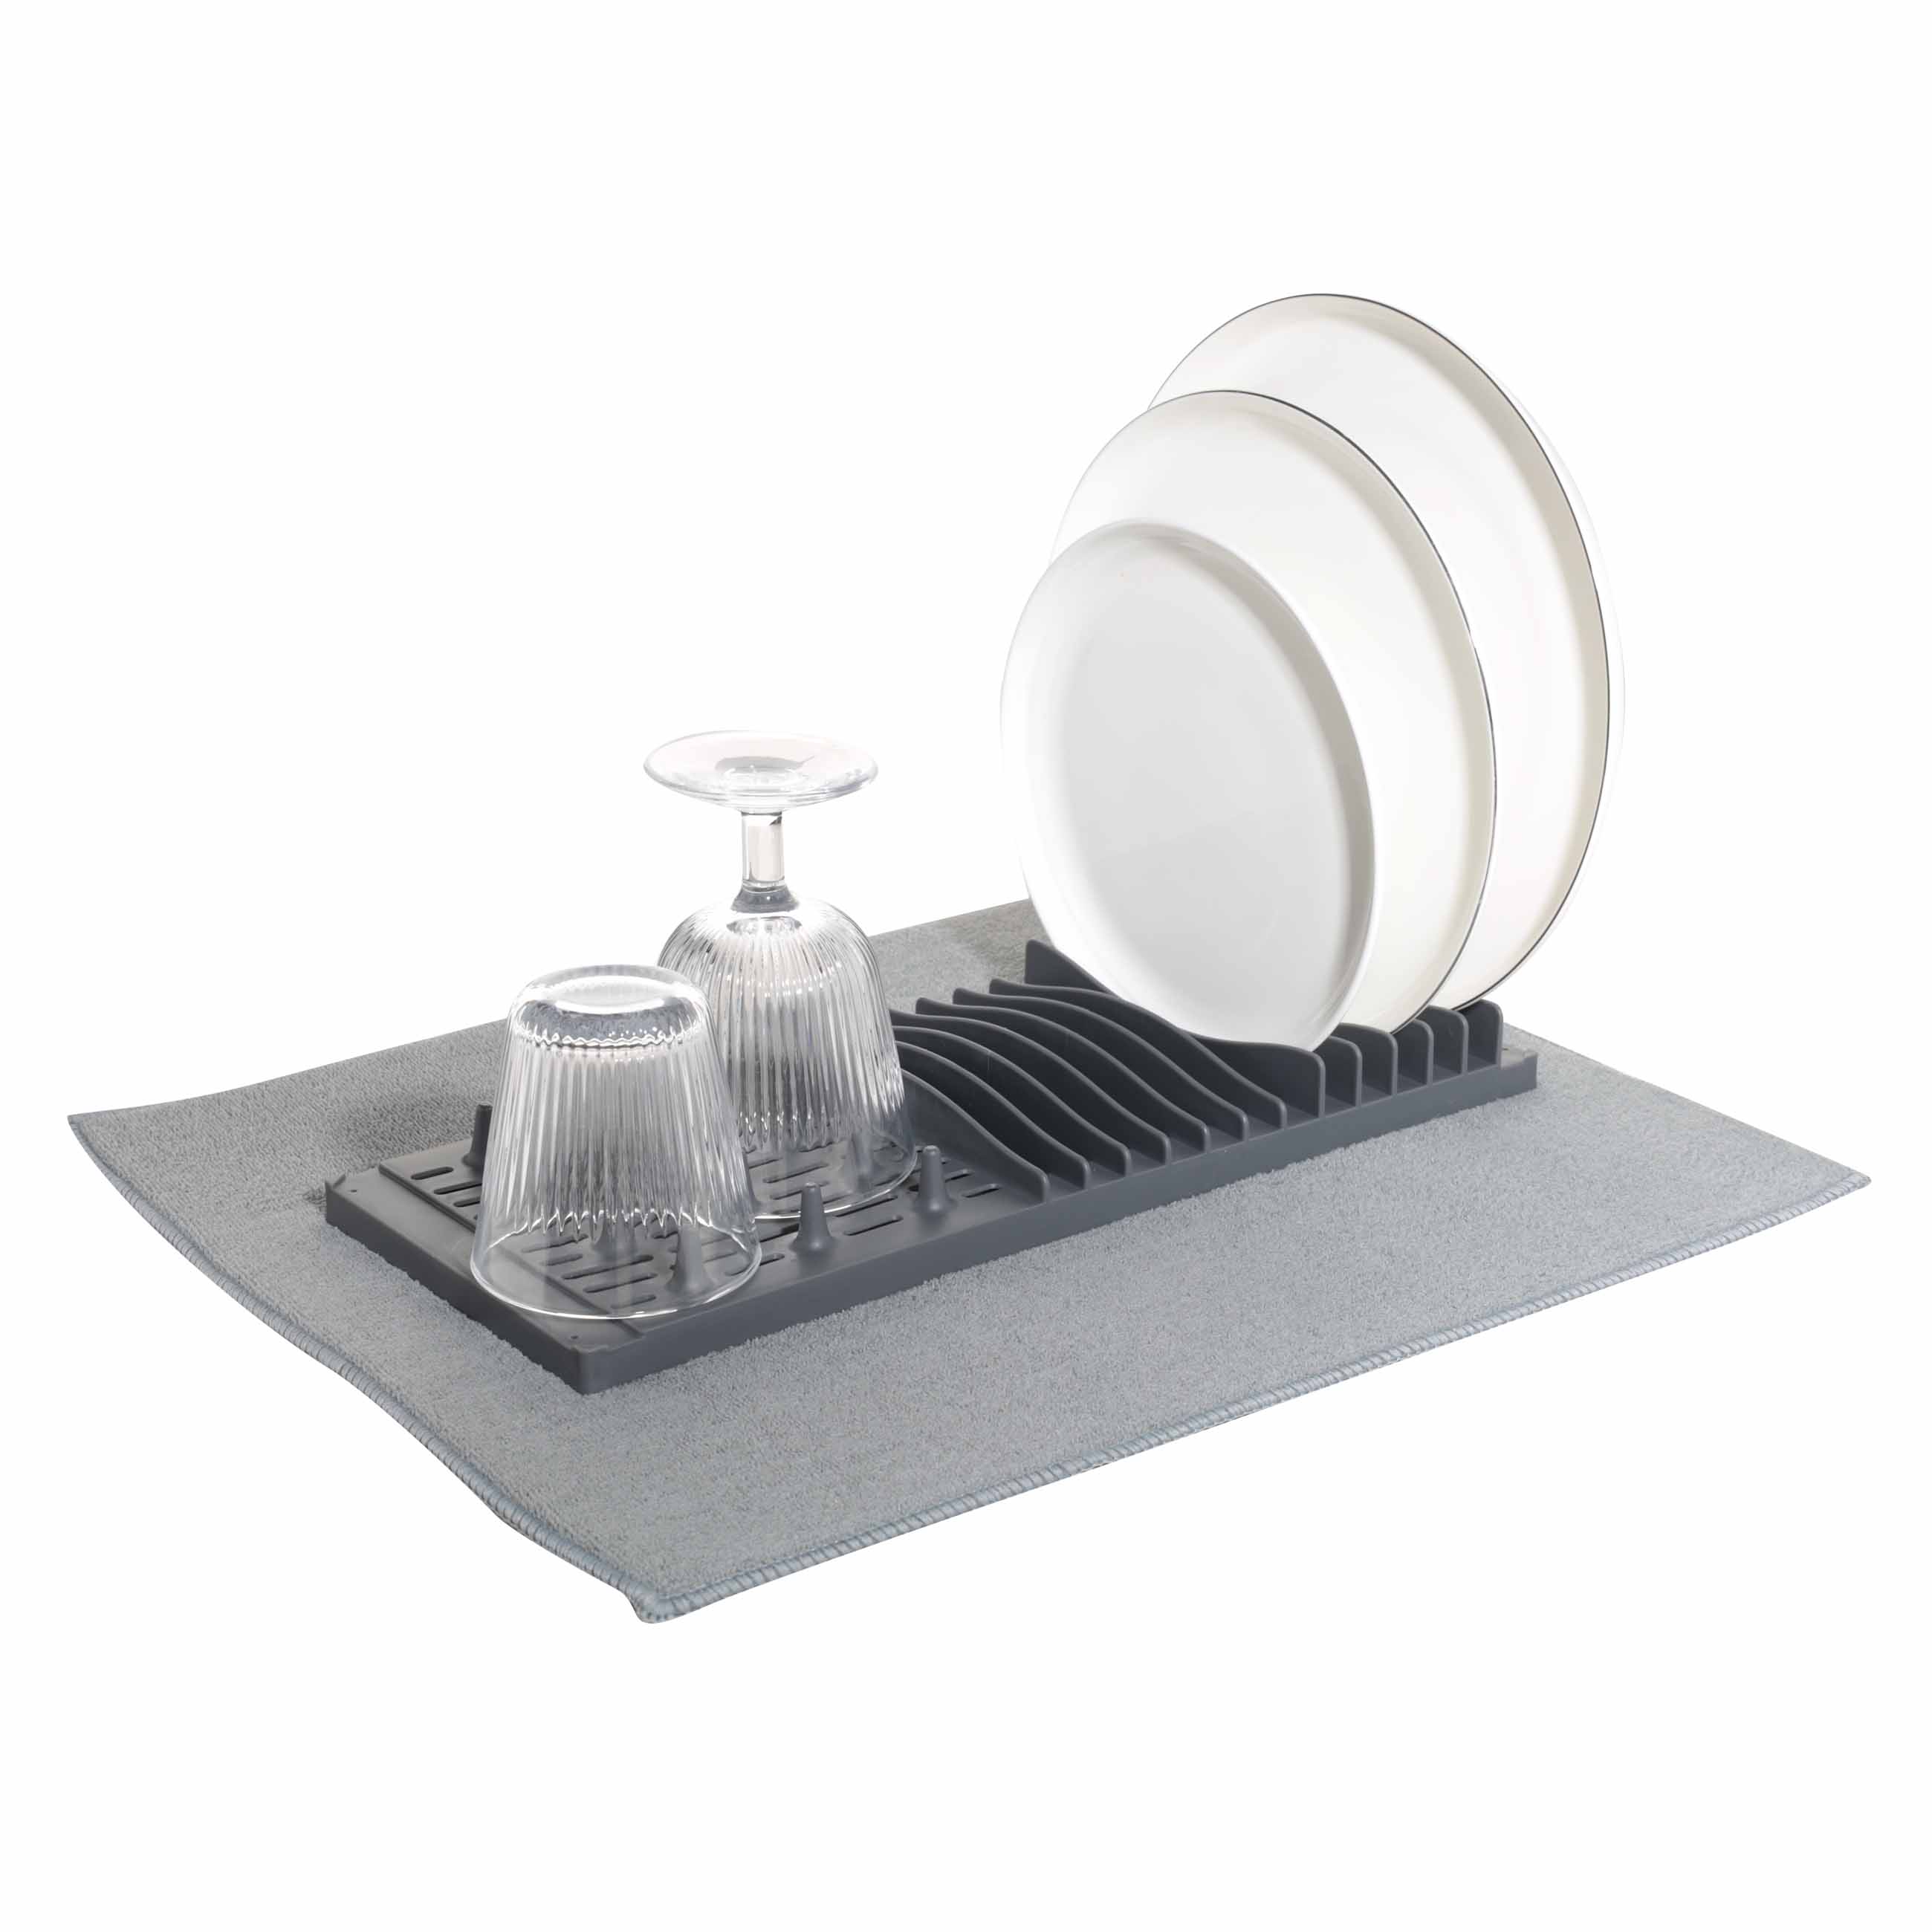 Dish drying mat with stand, 40x50 cm, microfiber / plastic, grey, Keeping изображение № 5